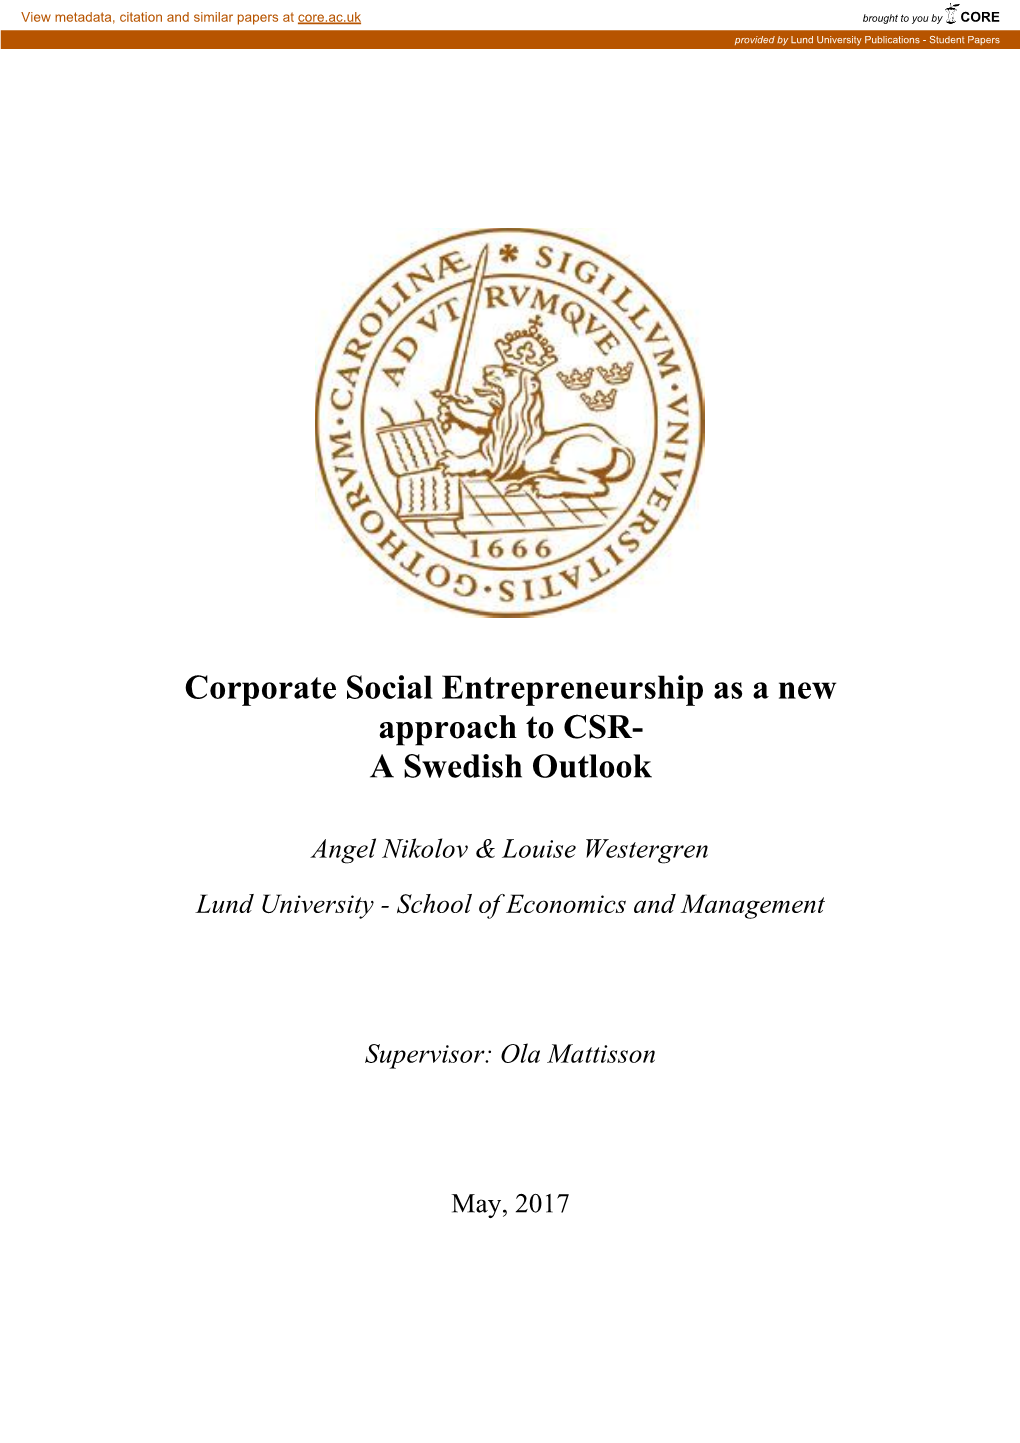 Corporate Social Entrepreneurship As a New Approach to CSR- a Swedish Outlook